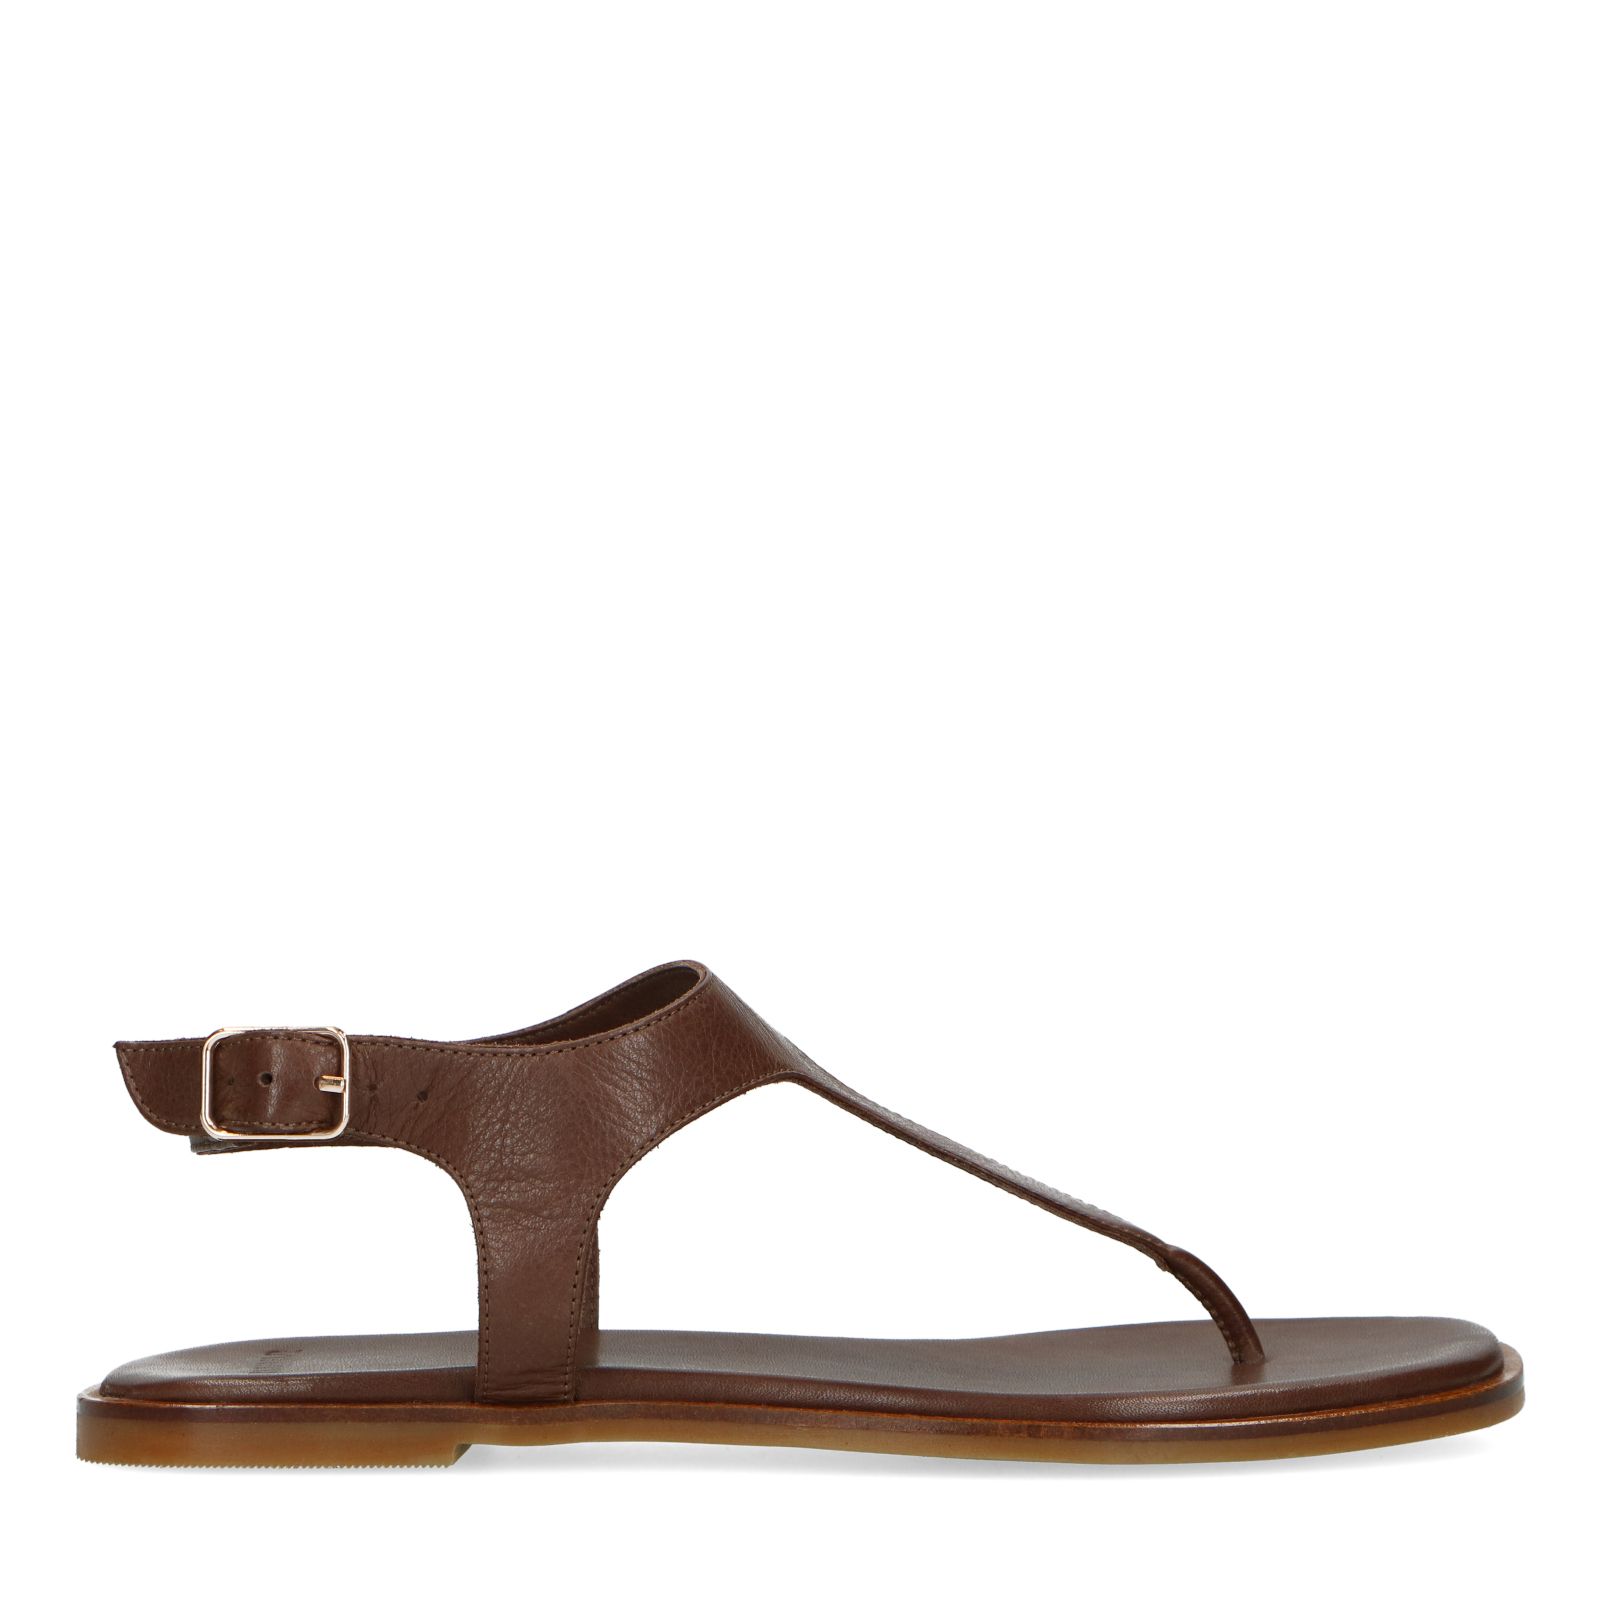 Bruine leren sandalen | MANFIELD